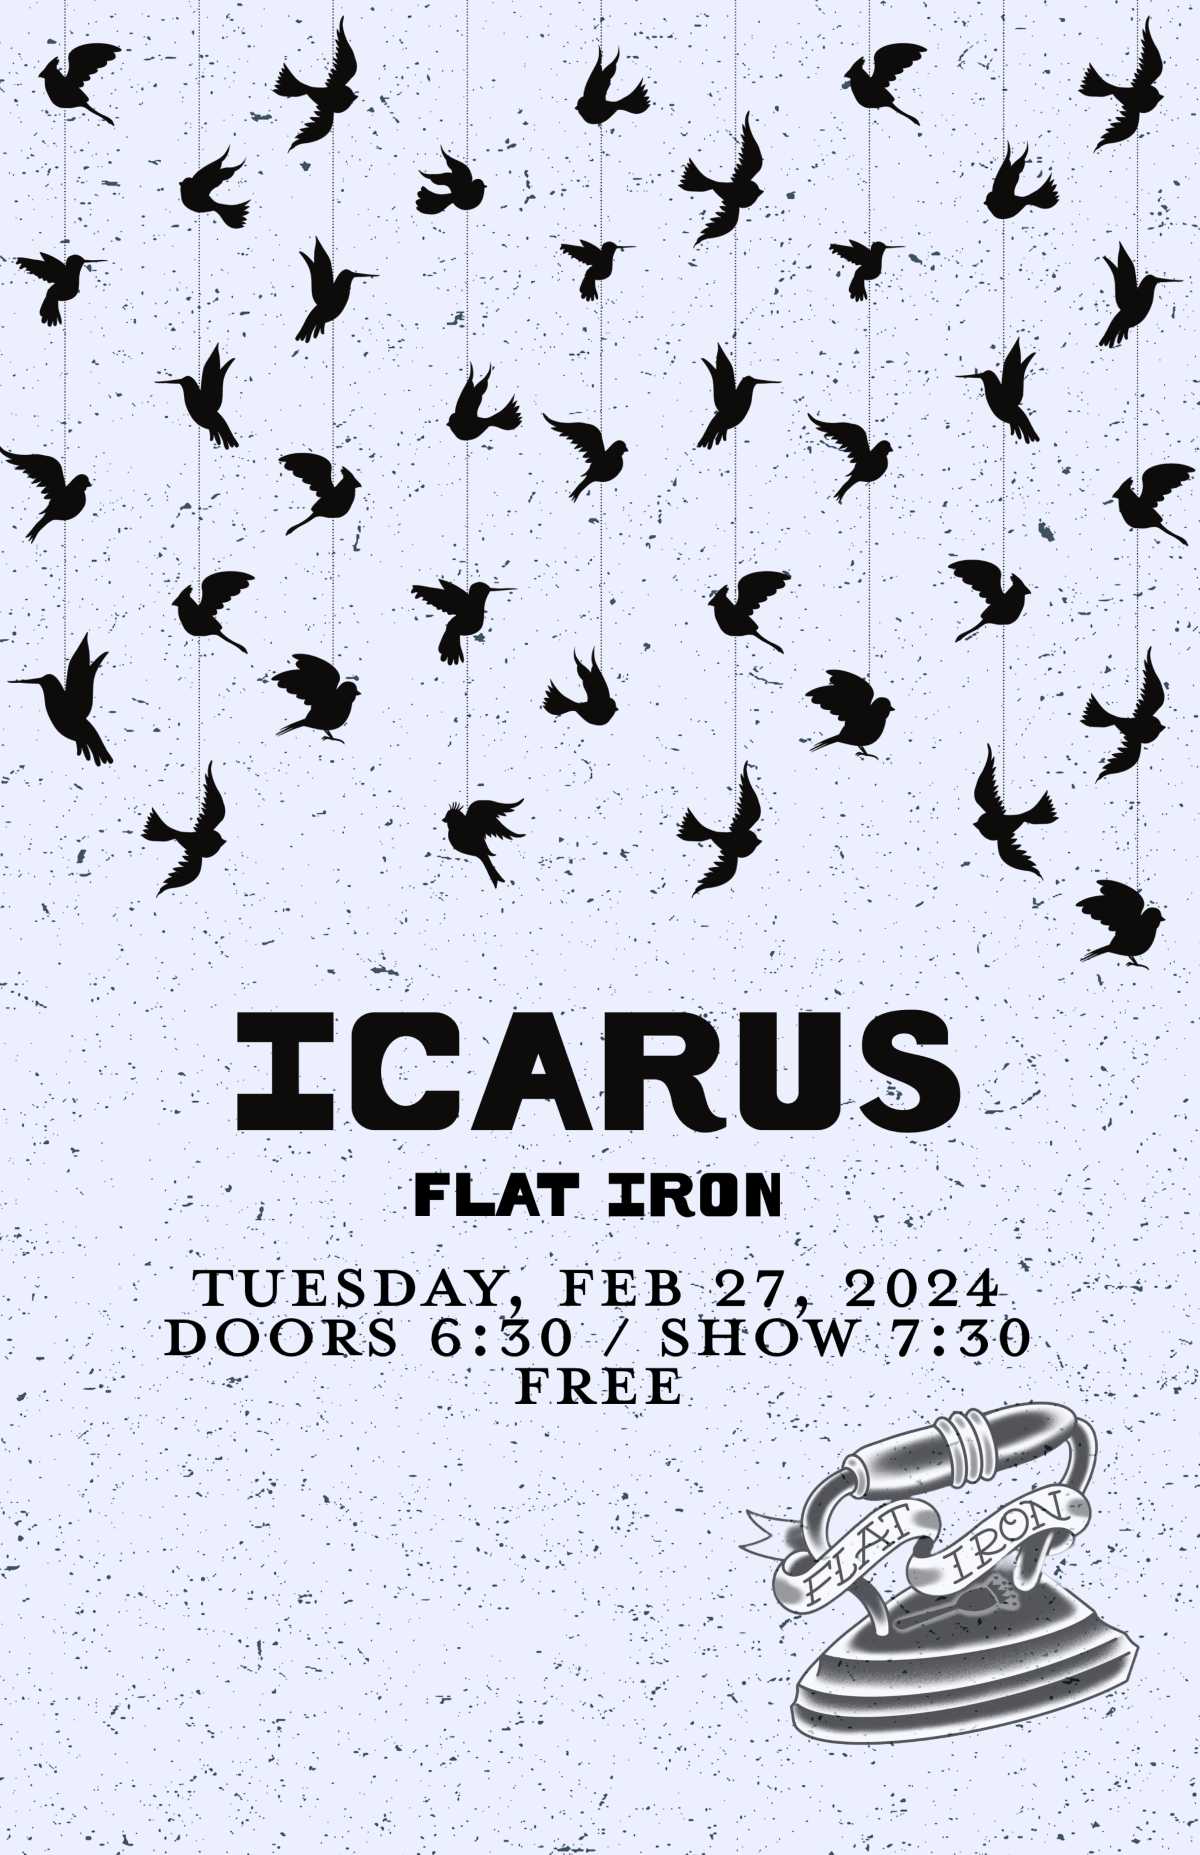 Icarus 430321708340779